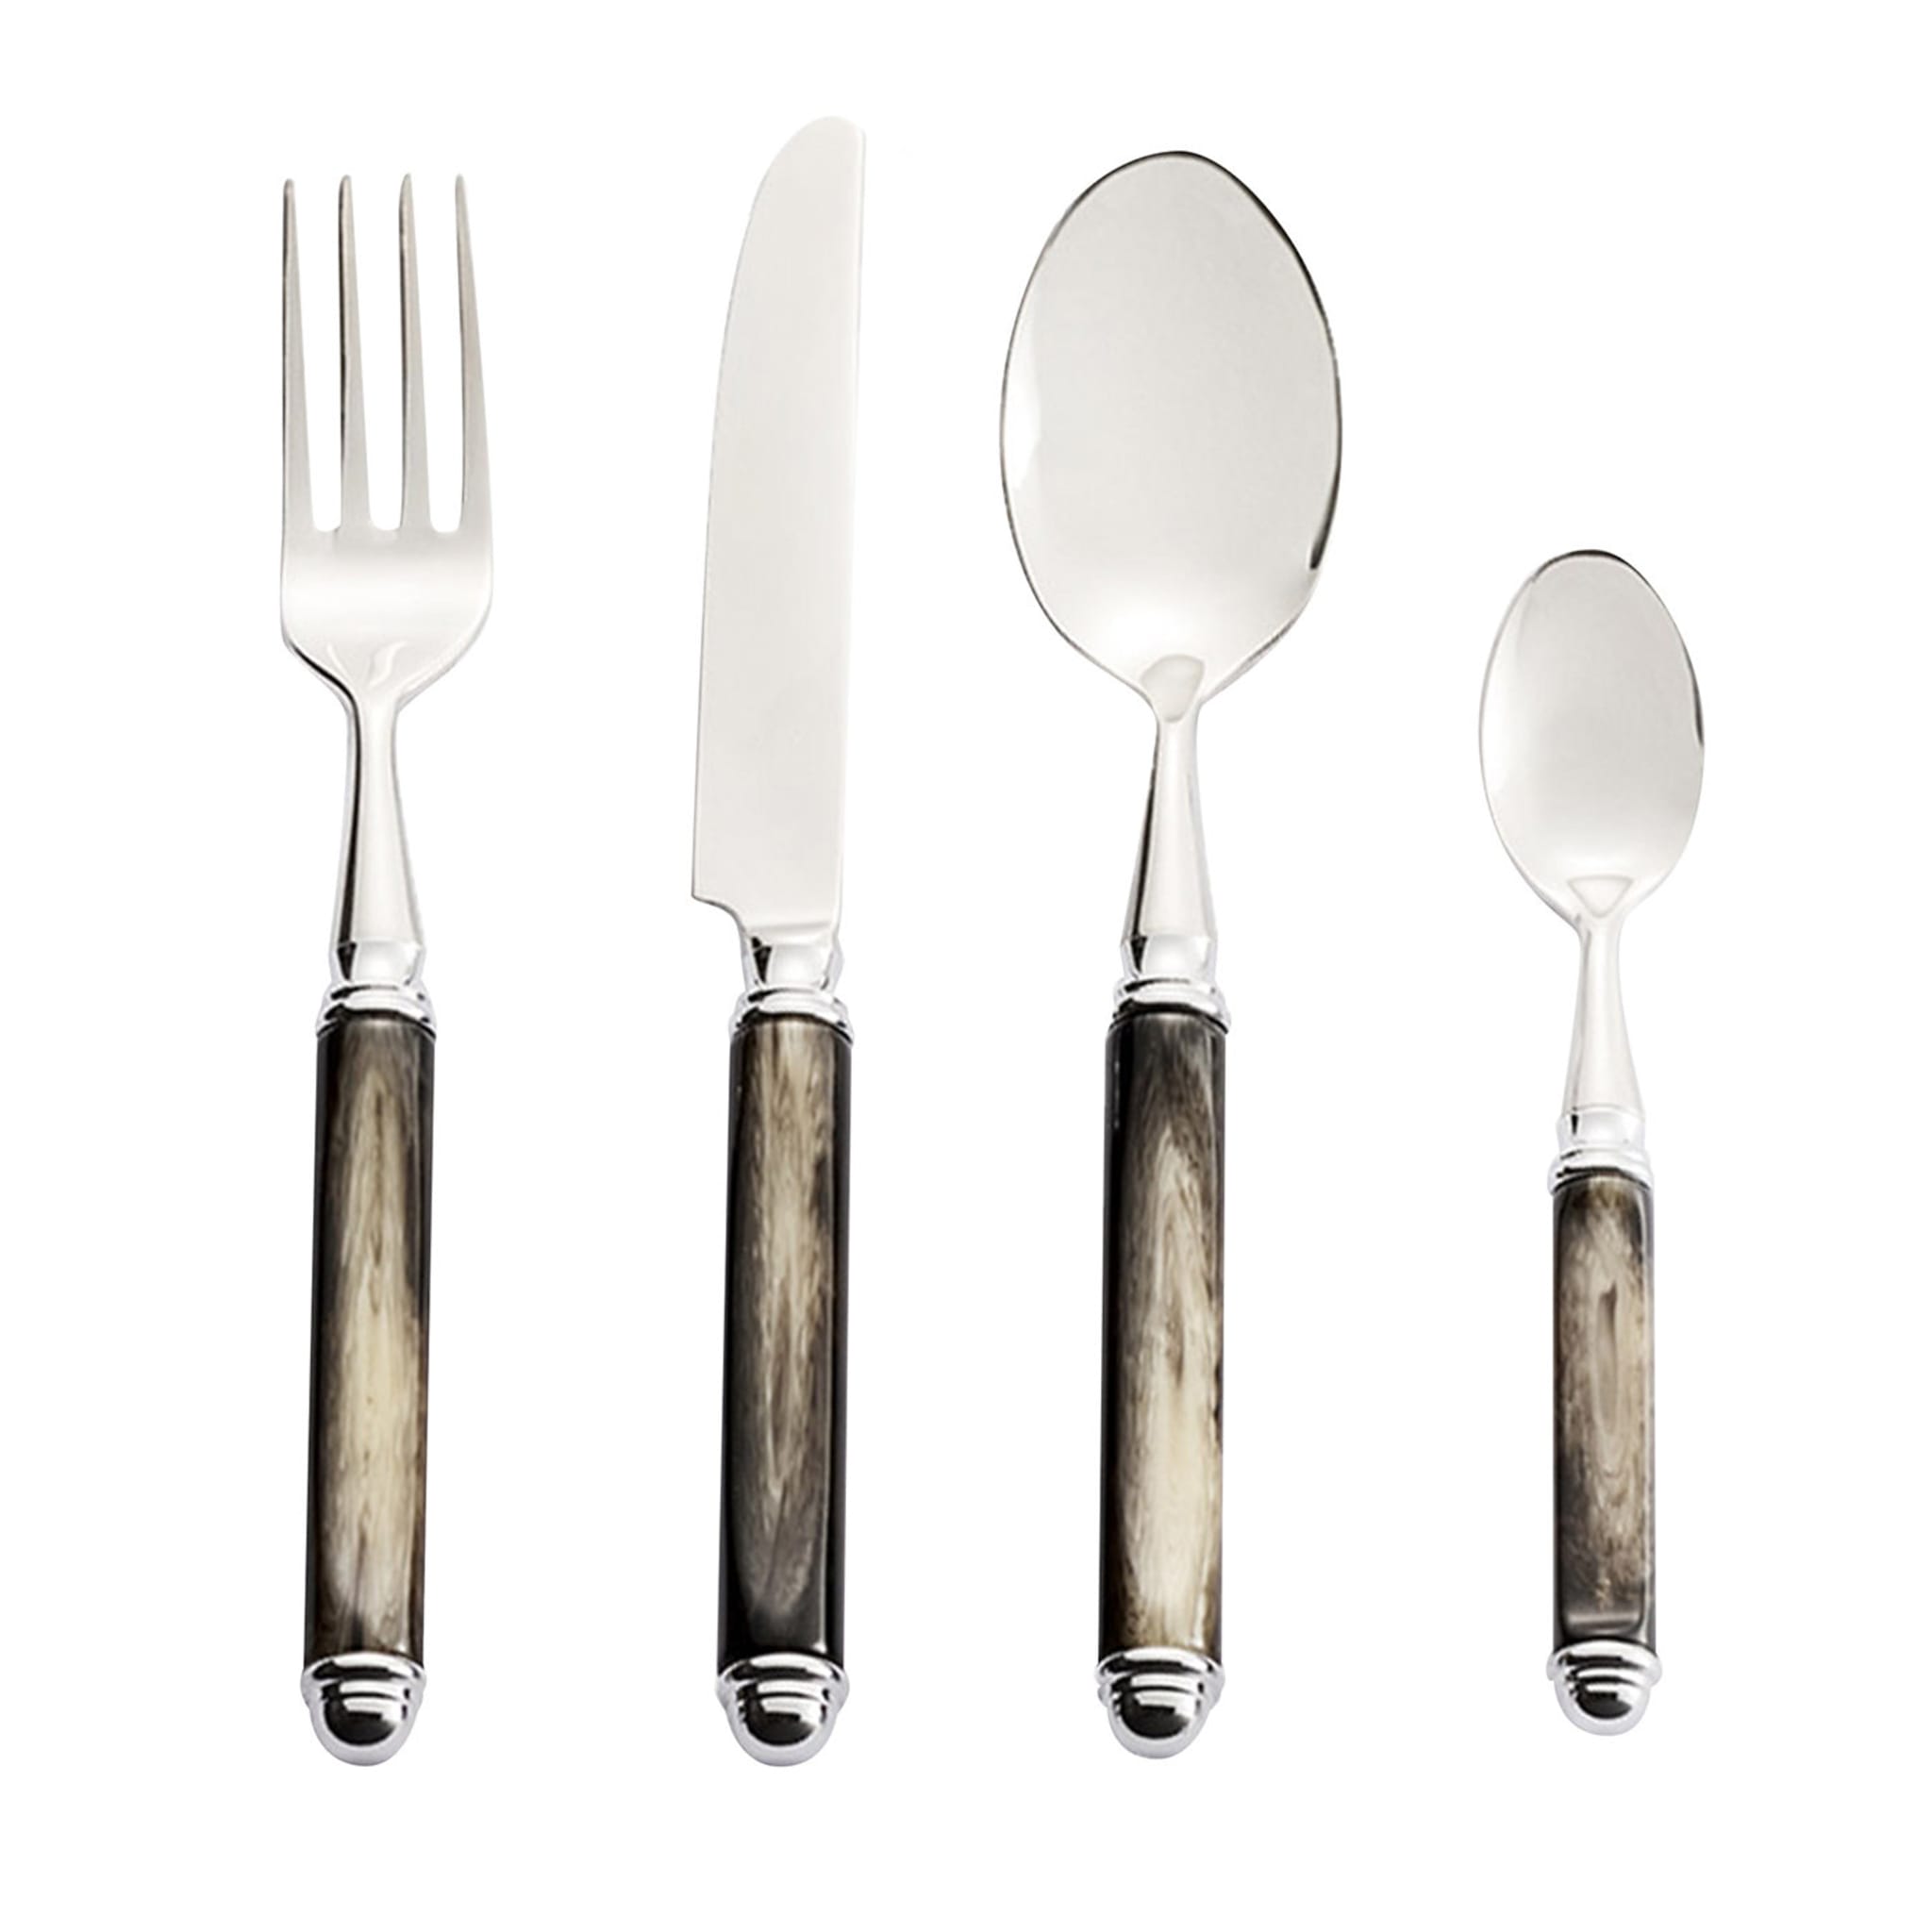 Zambia Cutlery Set of 4 - Main view